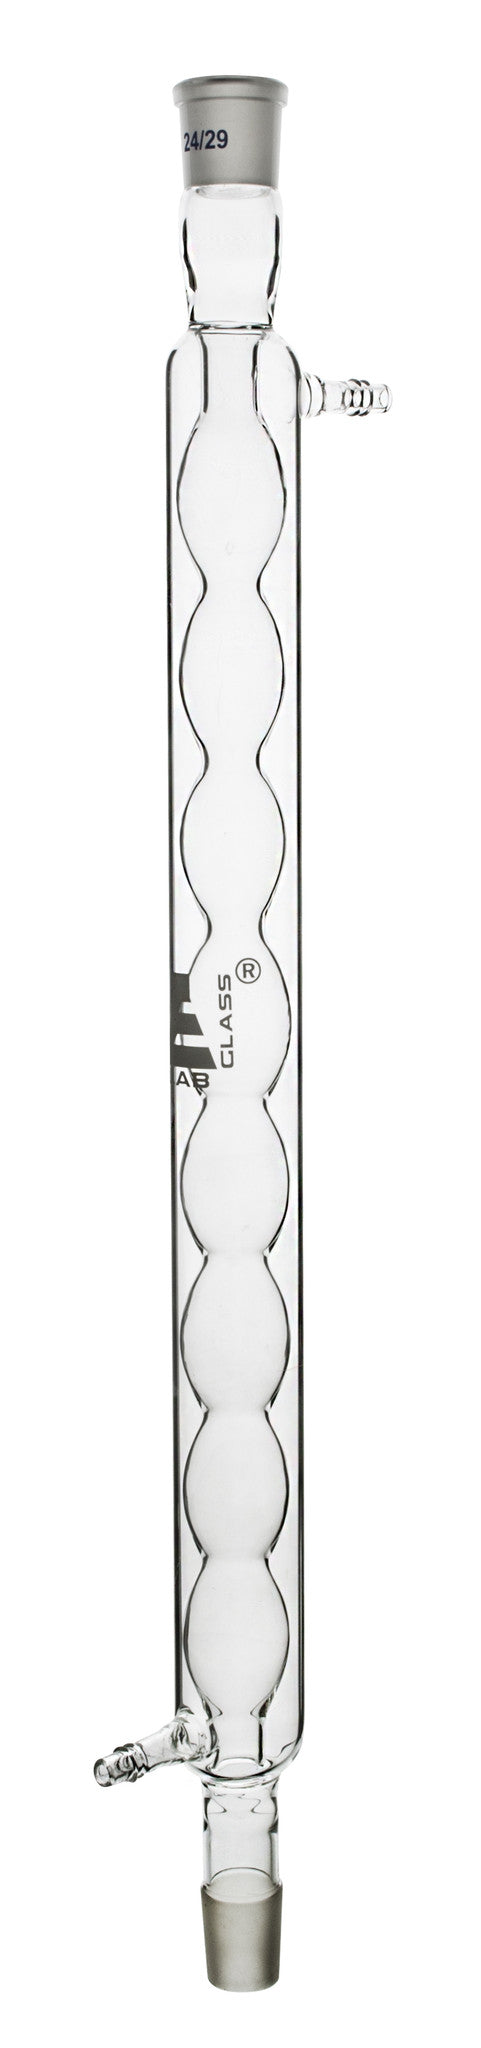 Condenser - Allihn Bulb, Socket size 14/23 & Cone size 14/23, effective length 25mm